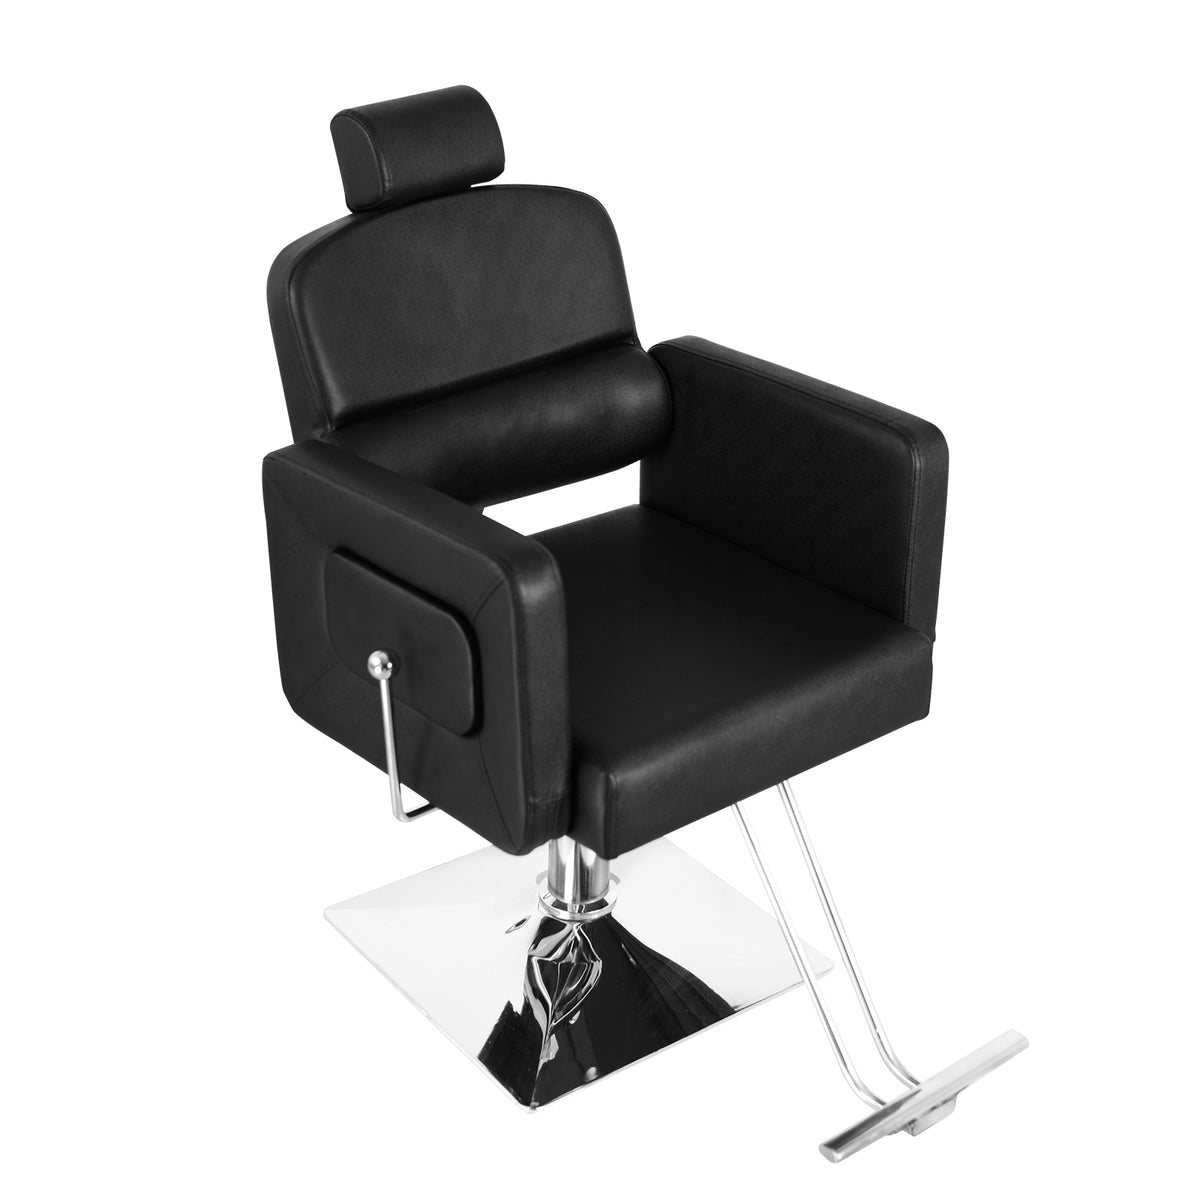 OmySalon SC1801 All Purpose Heavy Duty Reclining Minimalist Hair Salon Chair w/Headrest